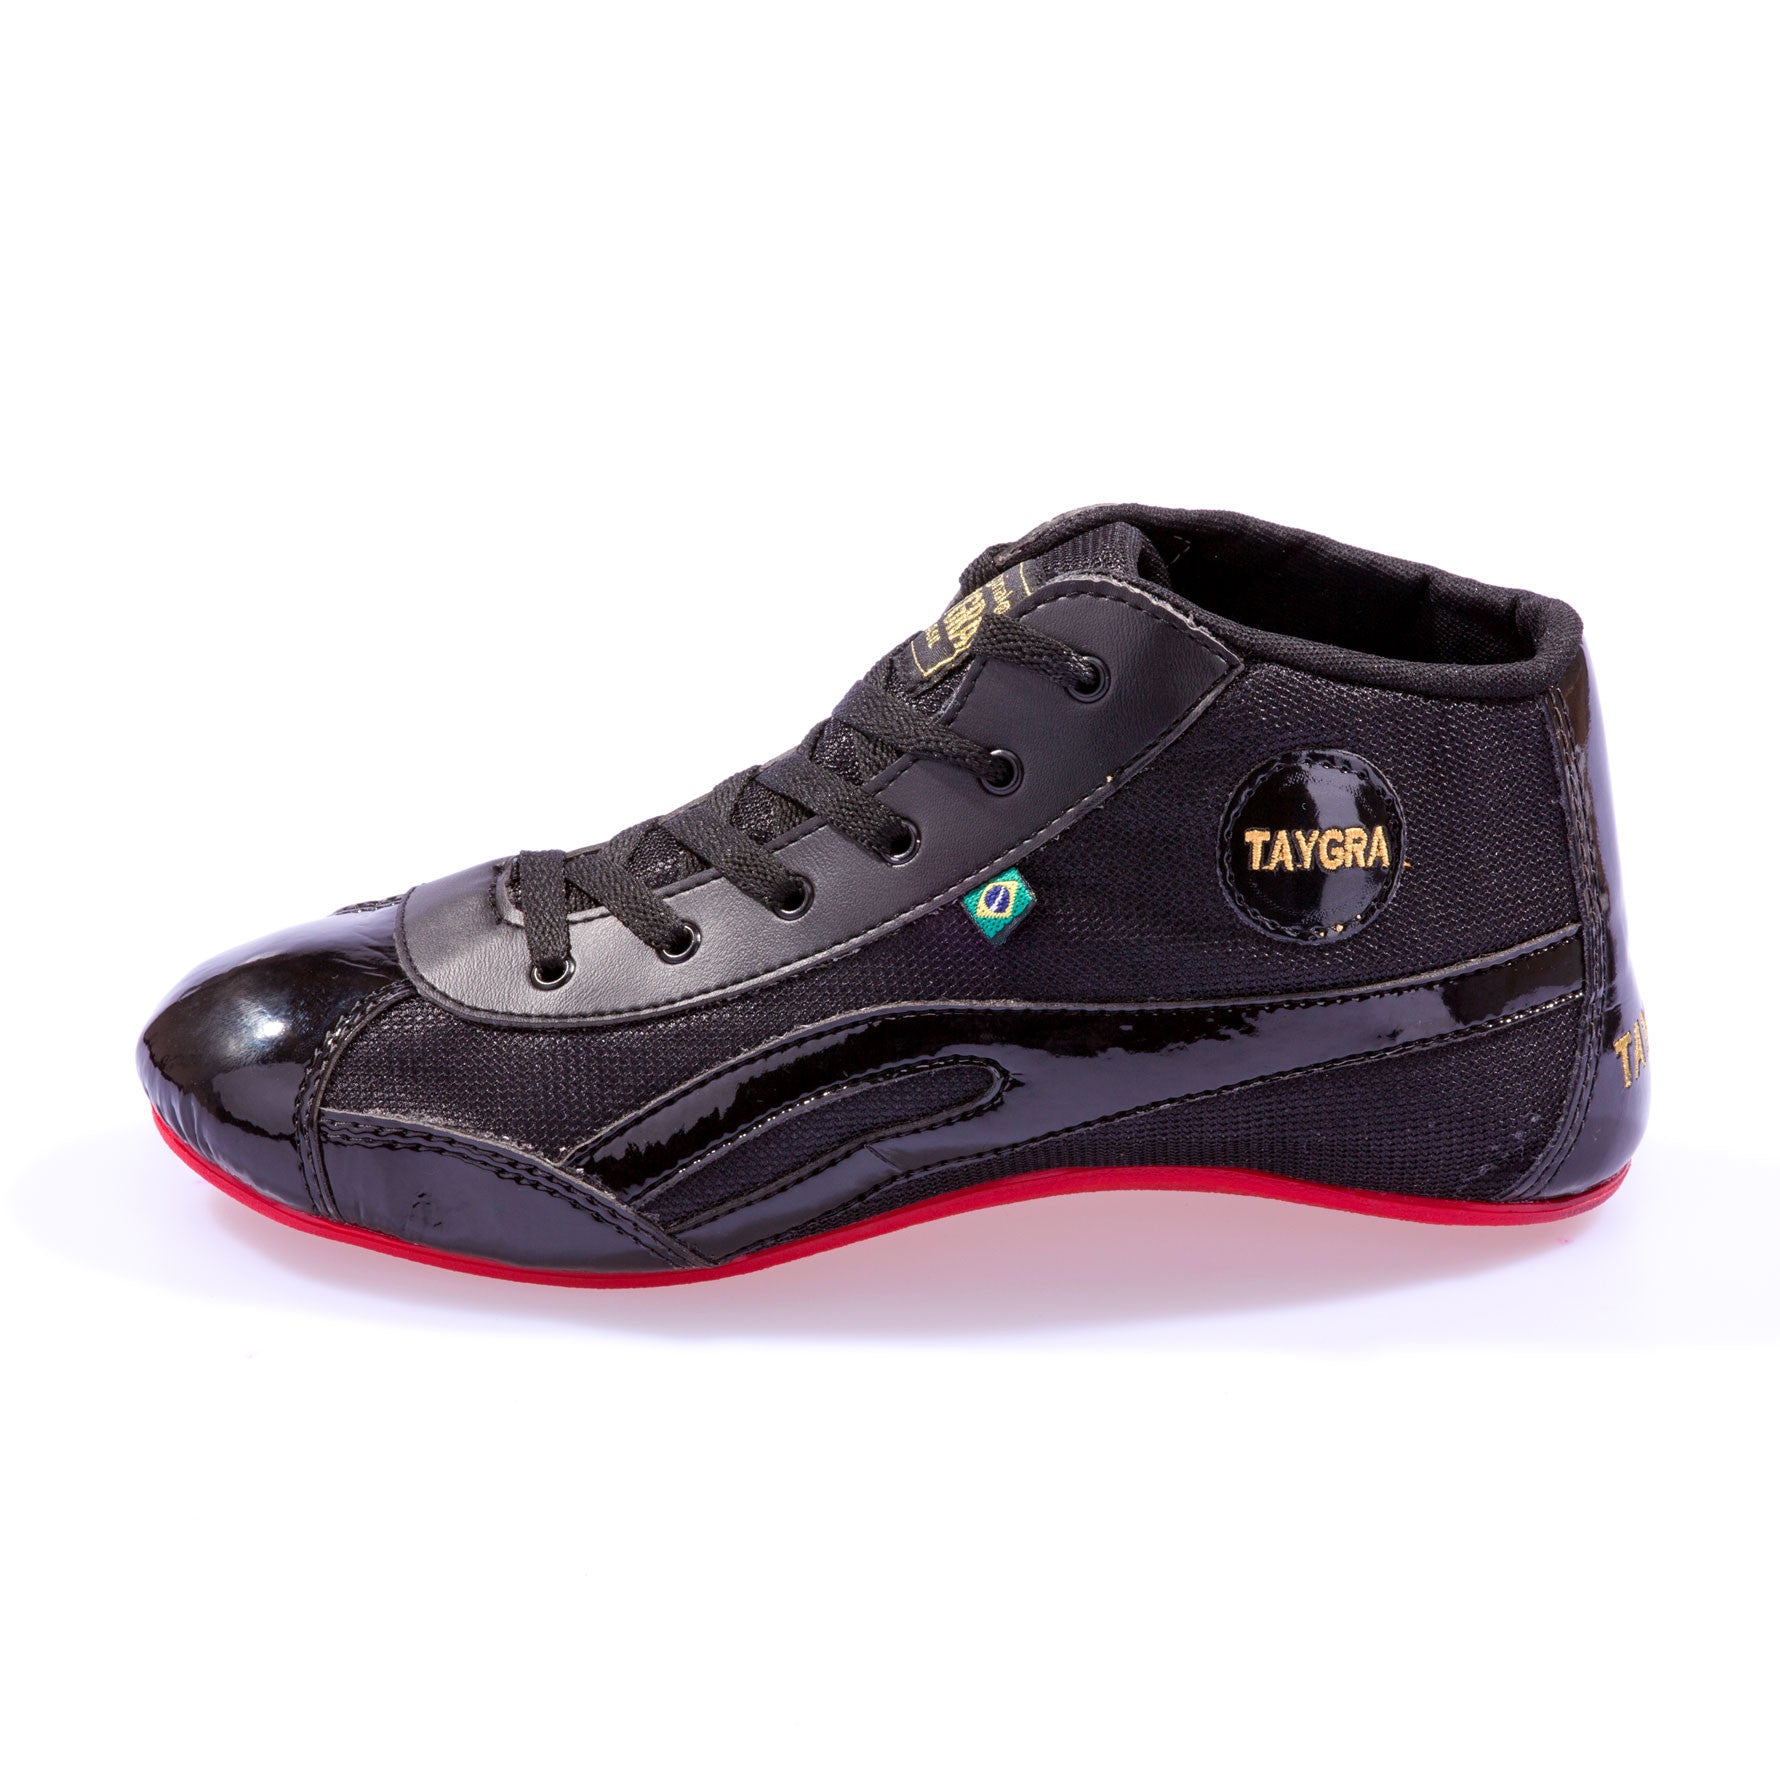 Mid-Top Dança Sneakers Black Patent & Red